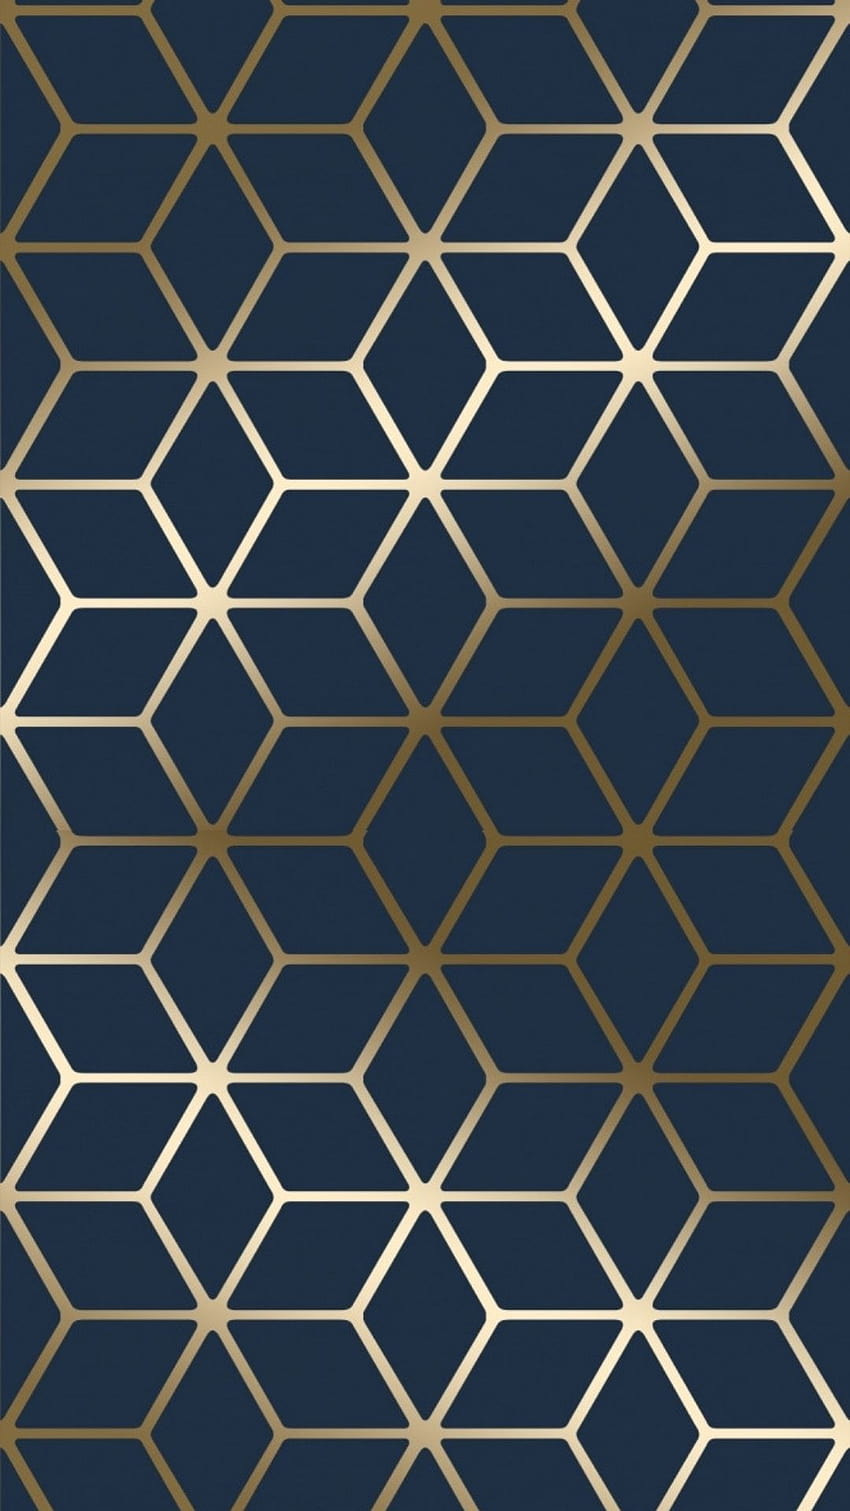 Free Geometric Desktop Wallpapers to design  Wepik